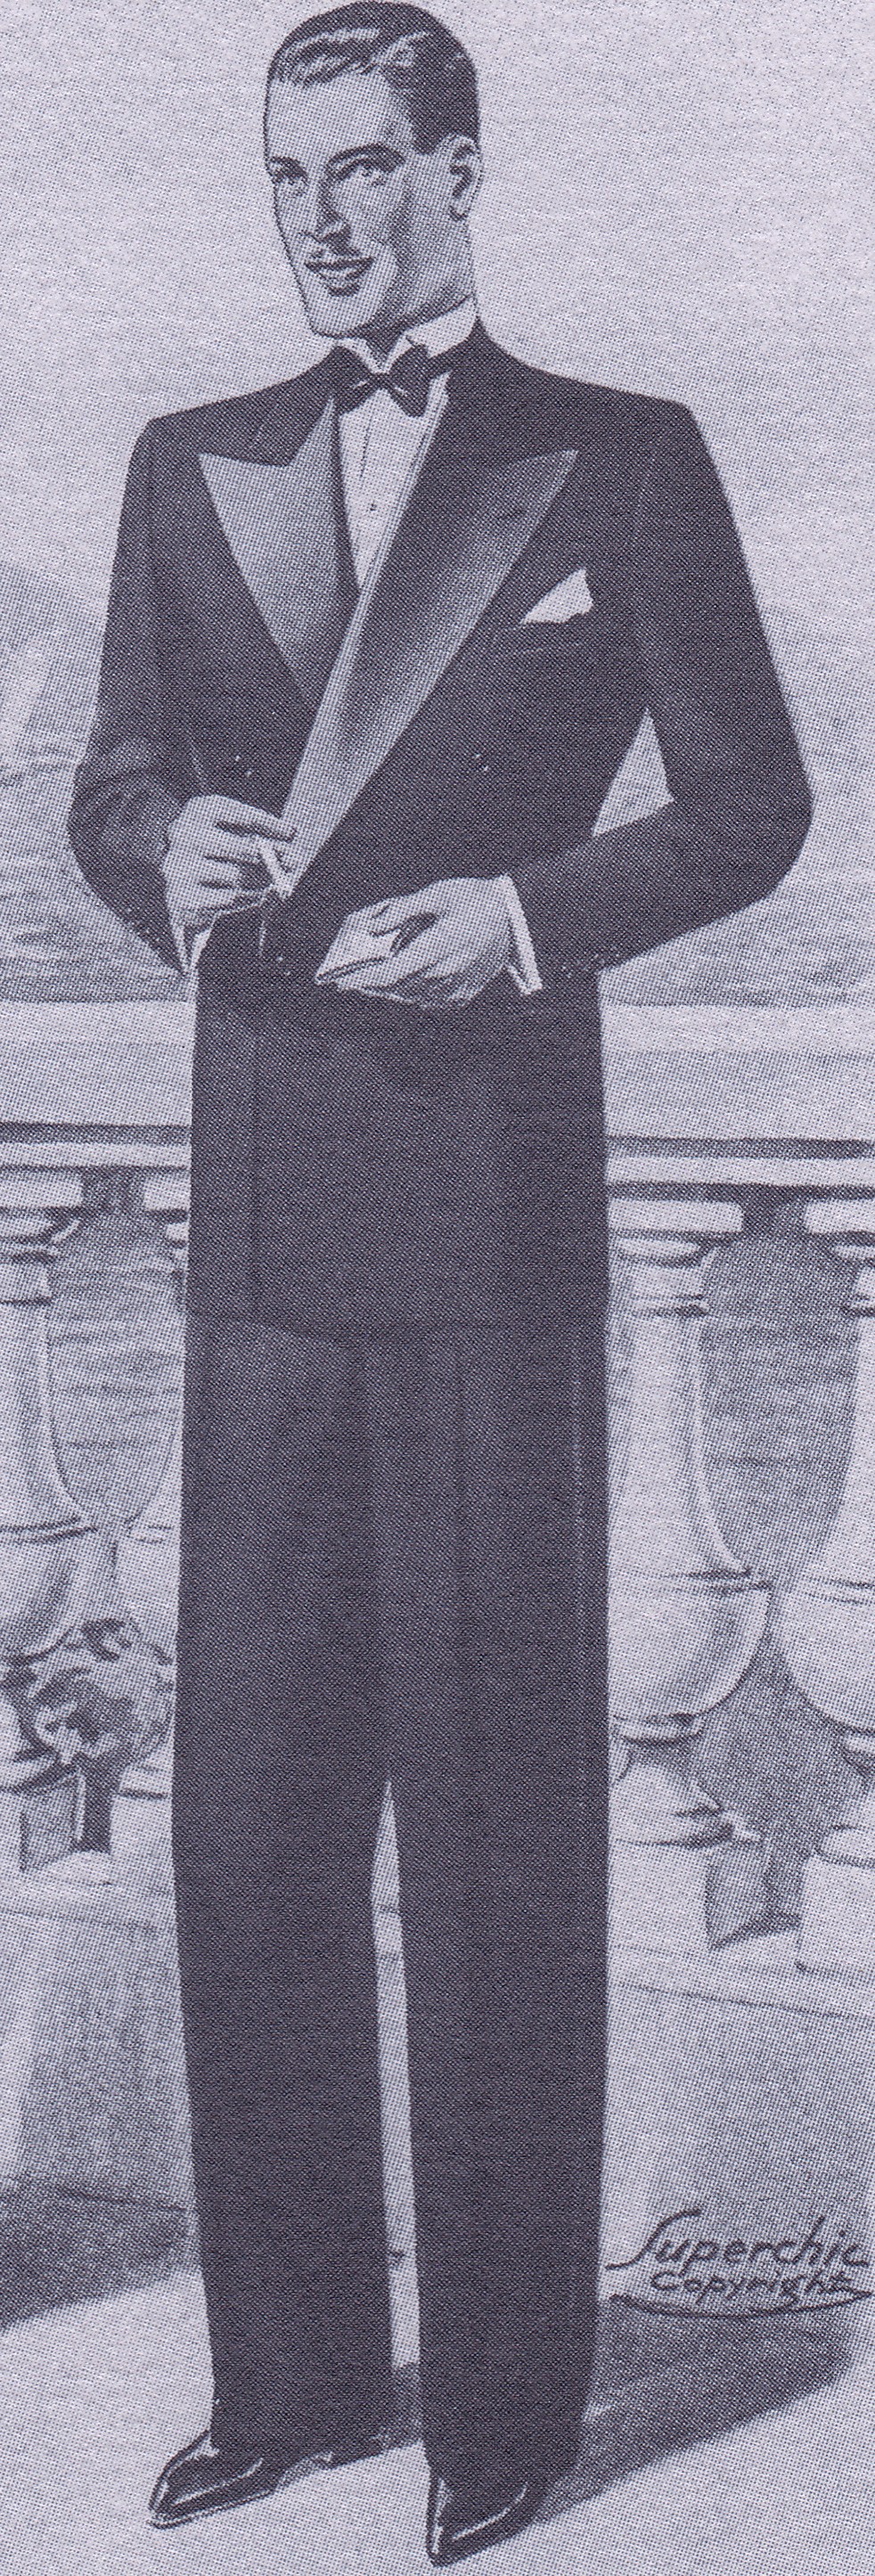 Custom-Tailored Tuxedo